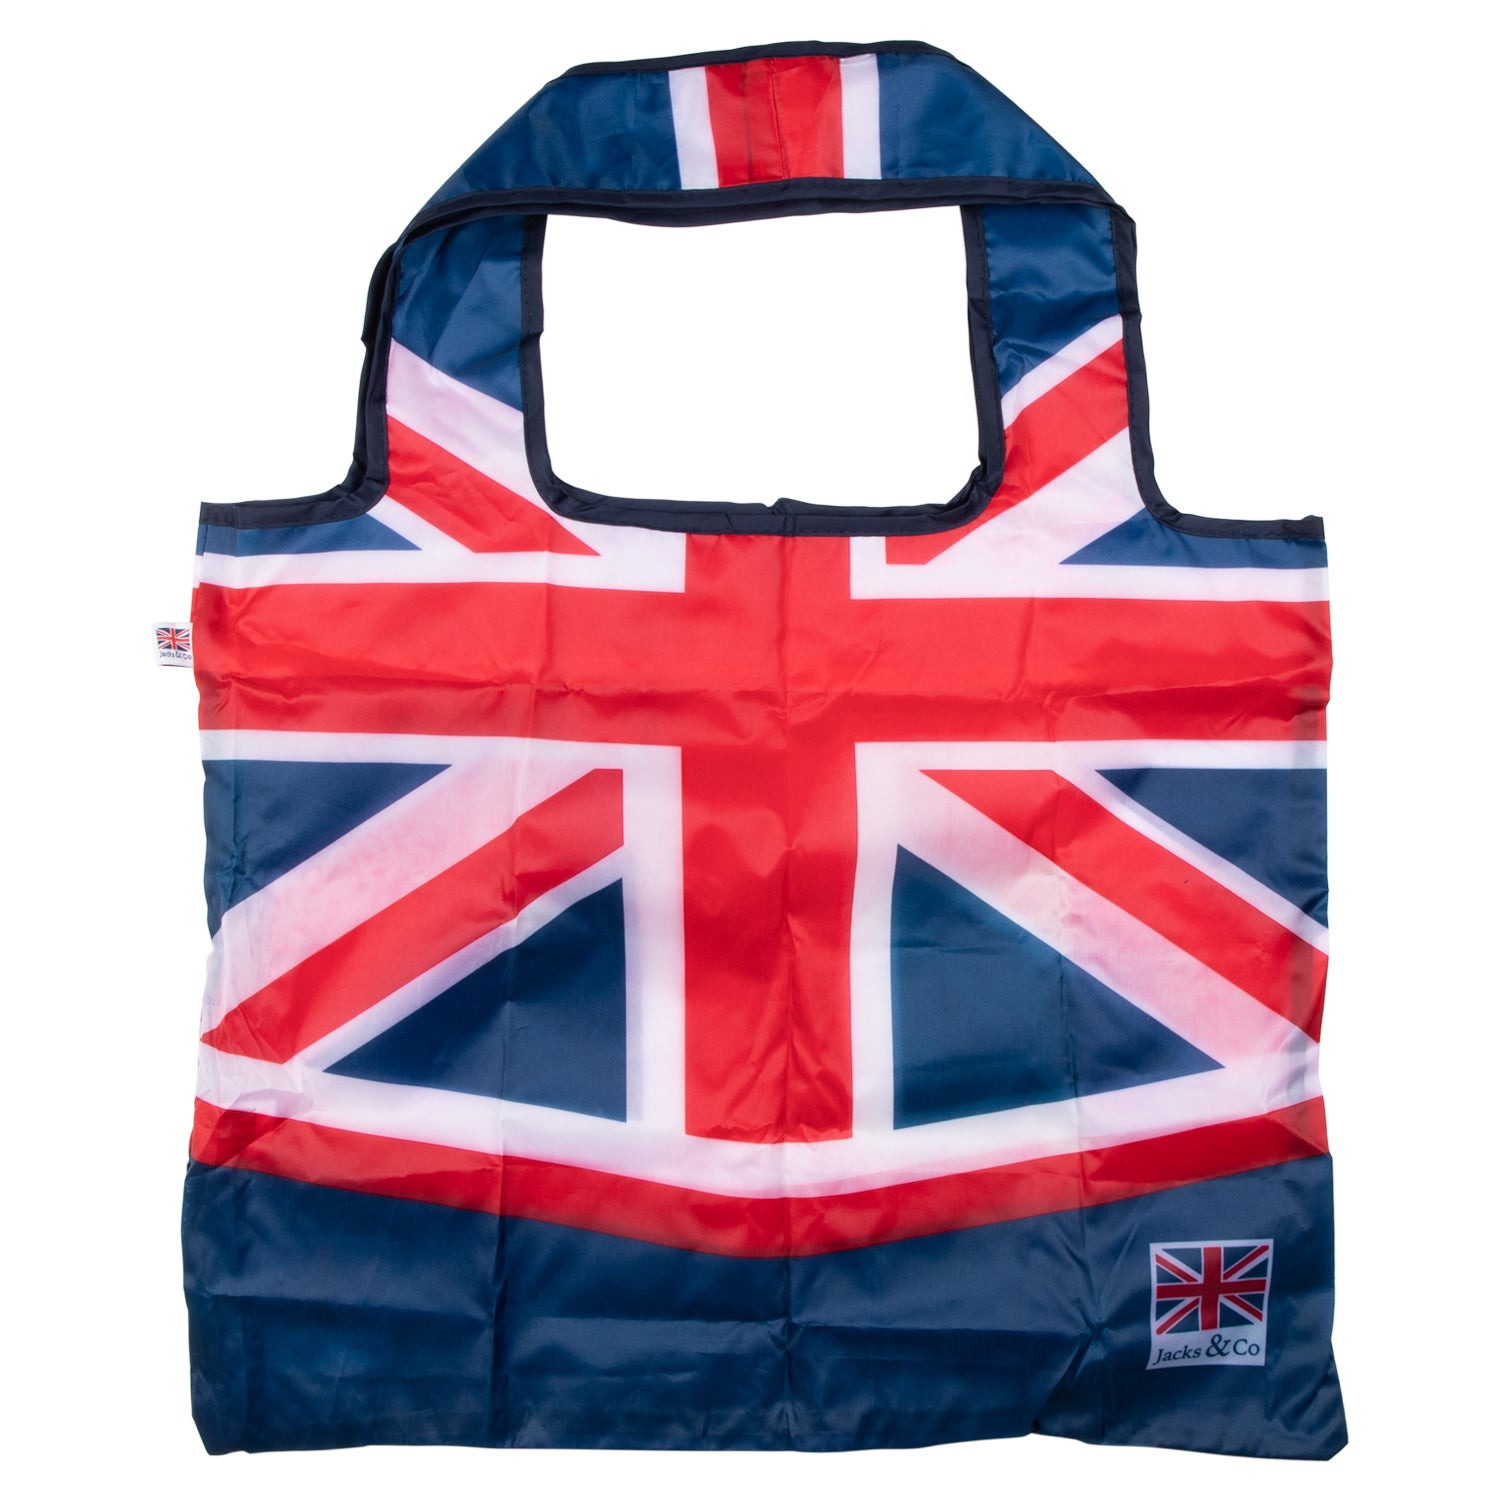 Jacks and Co Union Jack Foldaway Bag 1